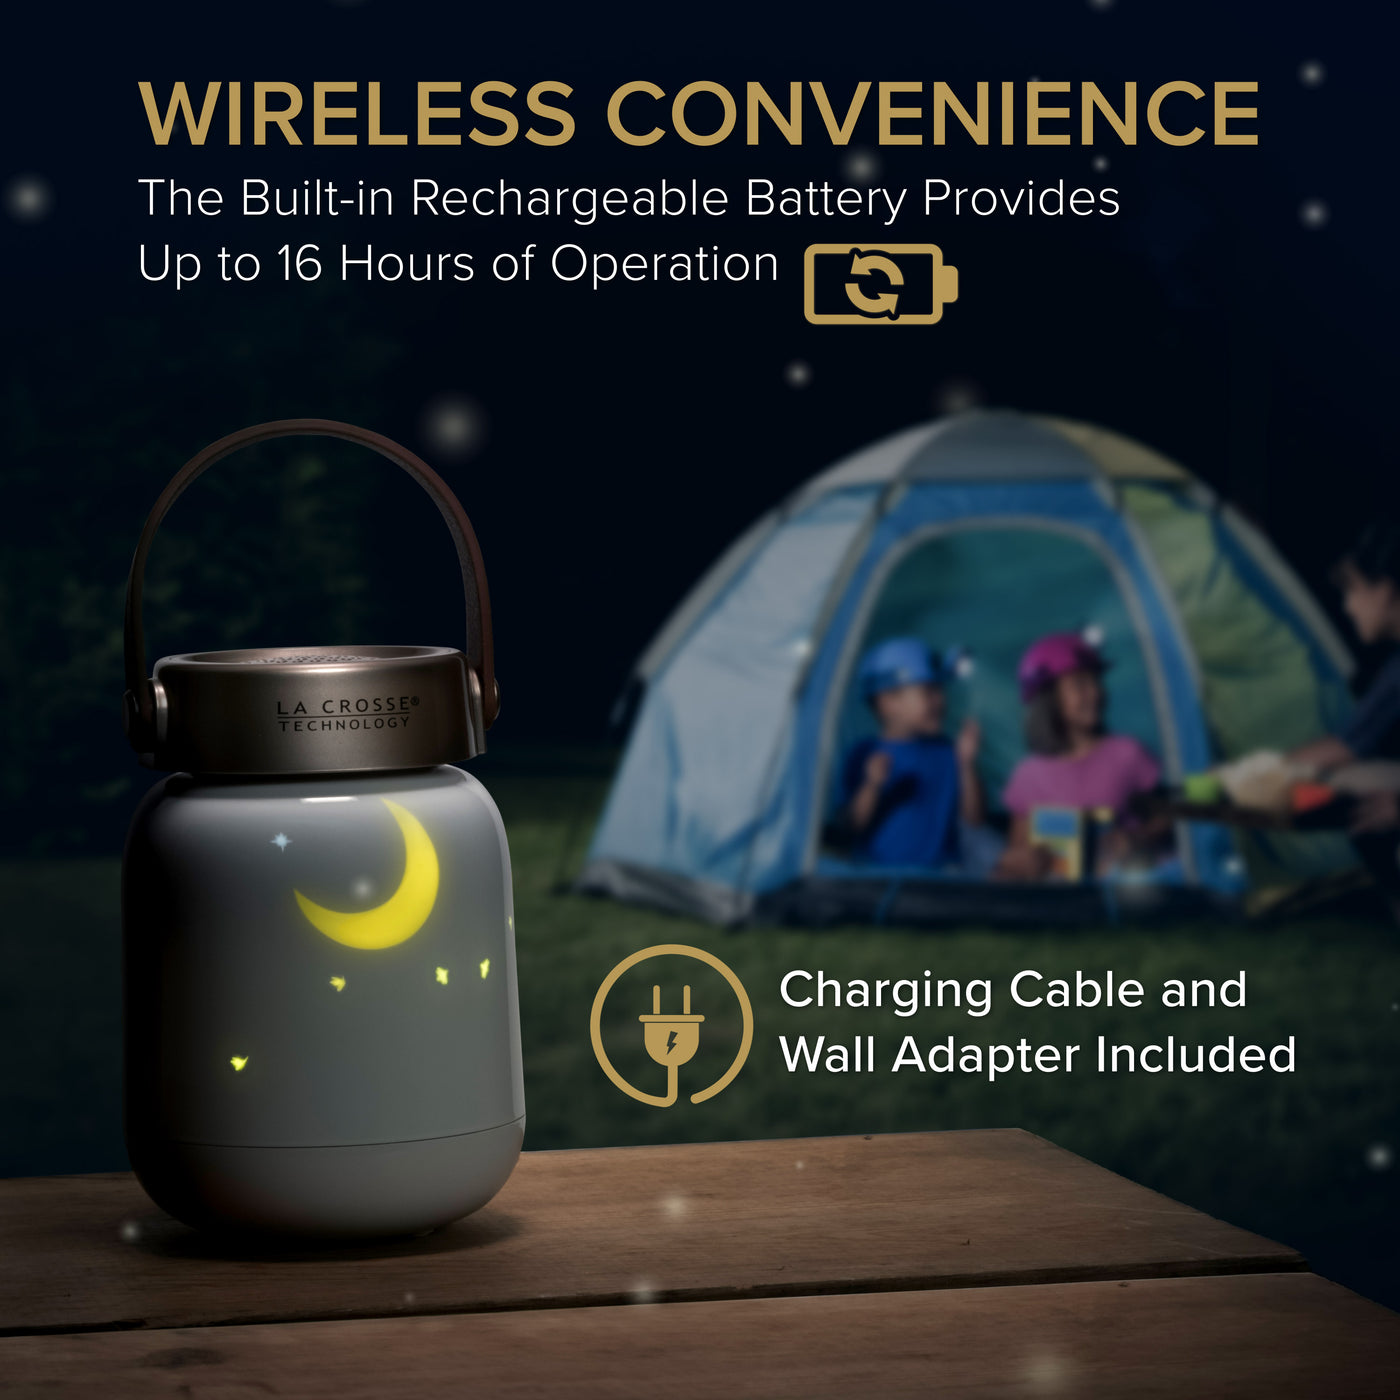 617-4817 Wireless Convenience